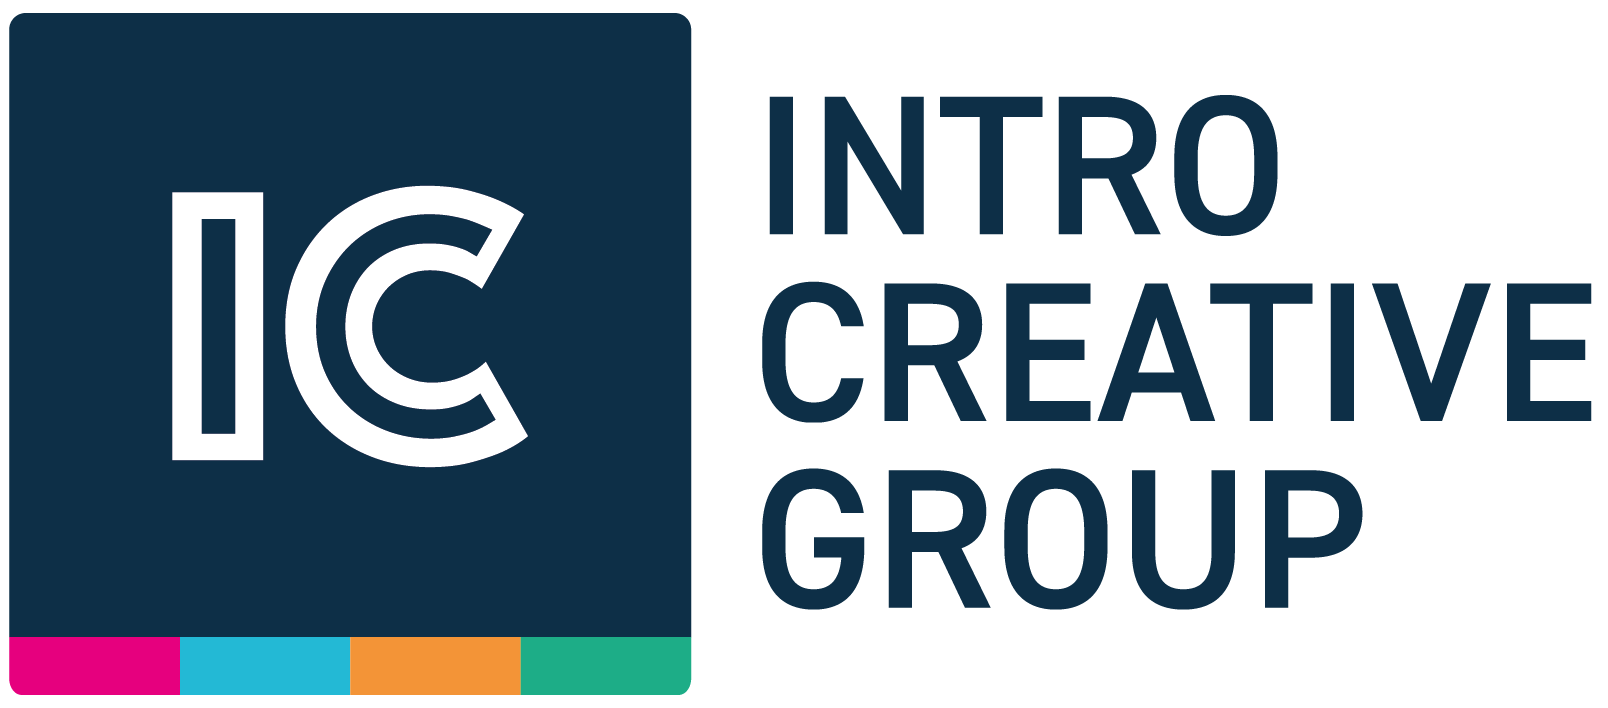 Intro Creative Group Logo - New Blue